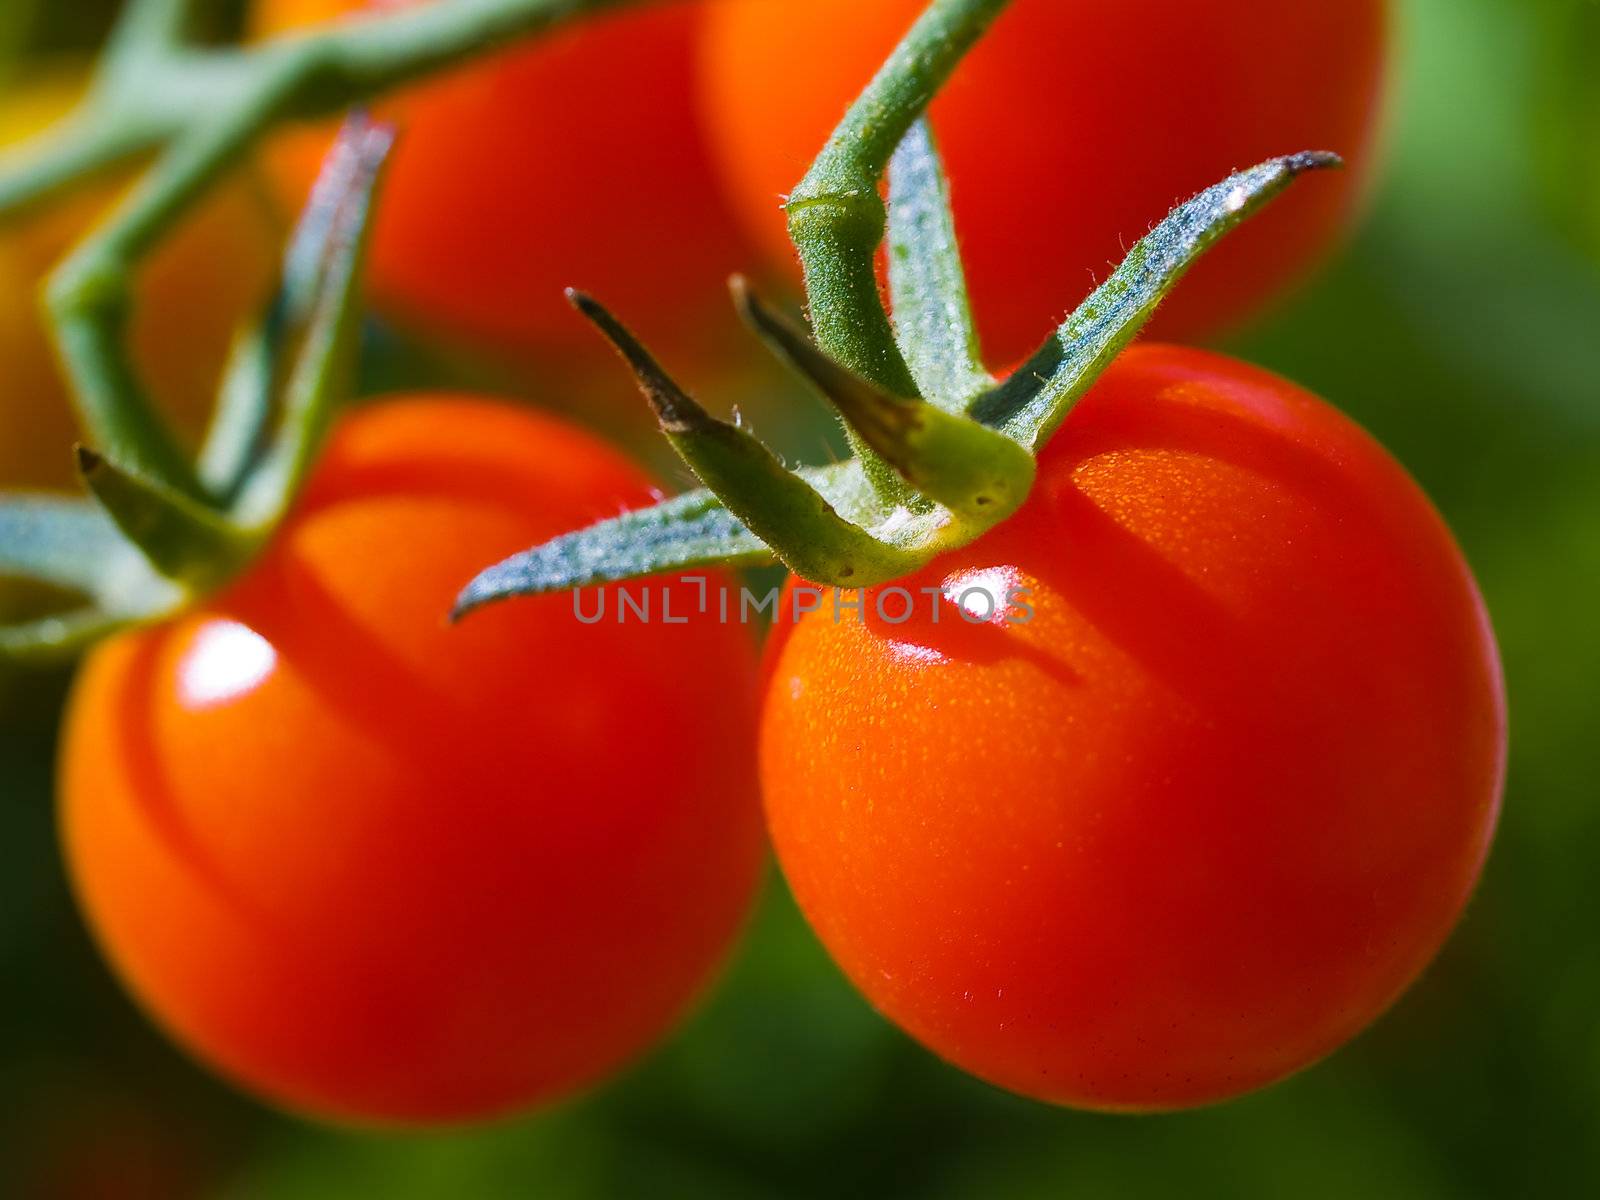 Red ripe tomatoes on the vine in full sunlight